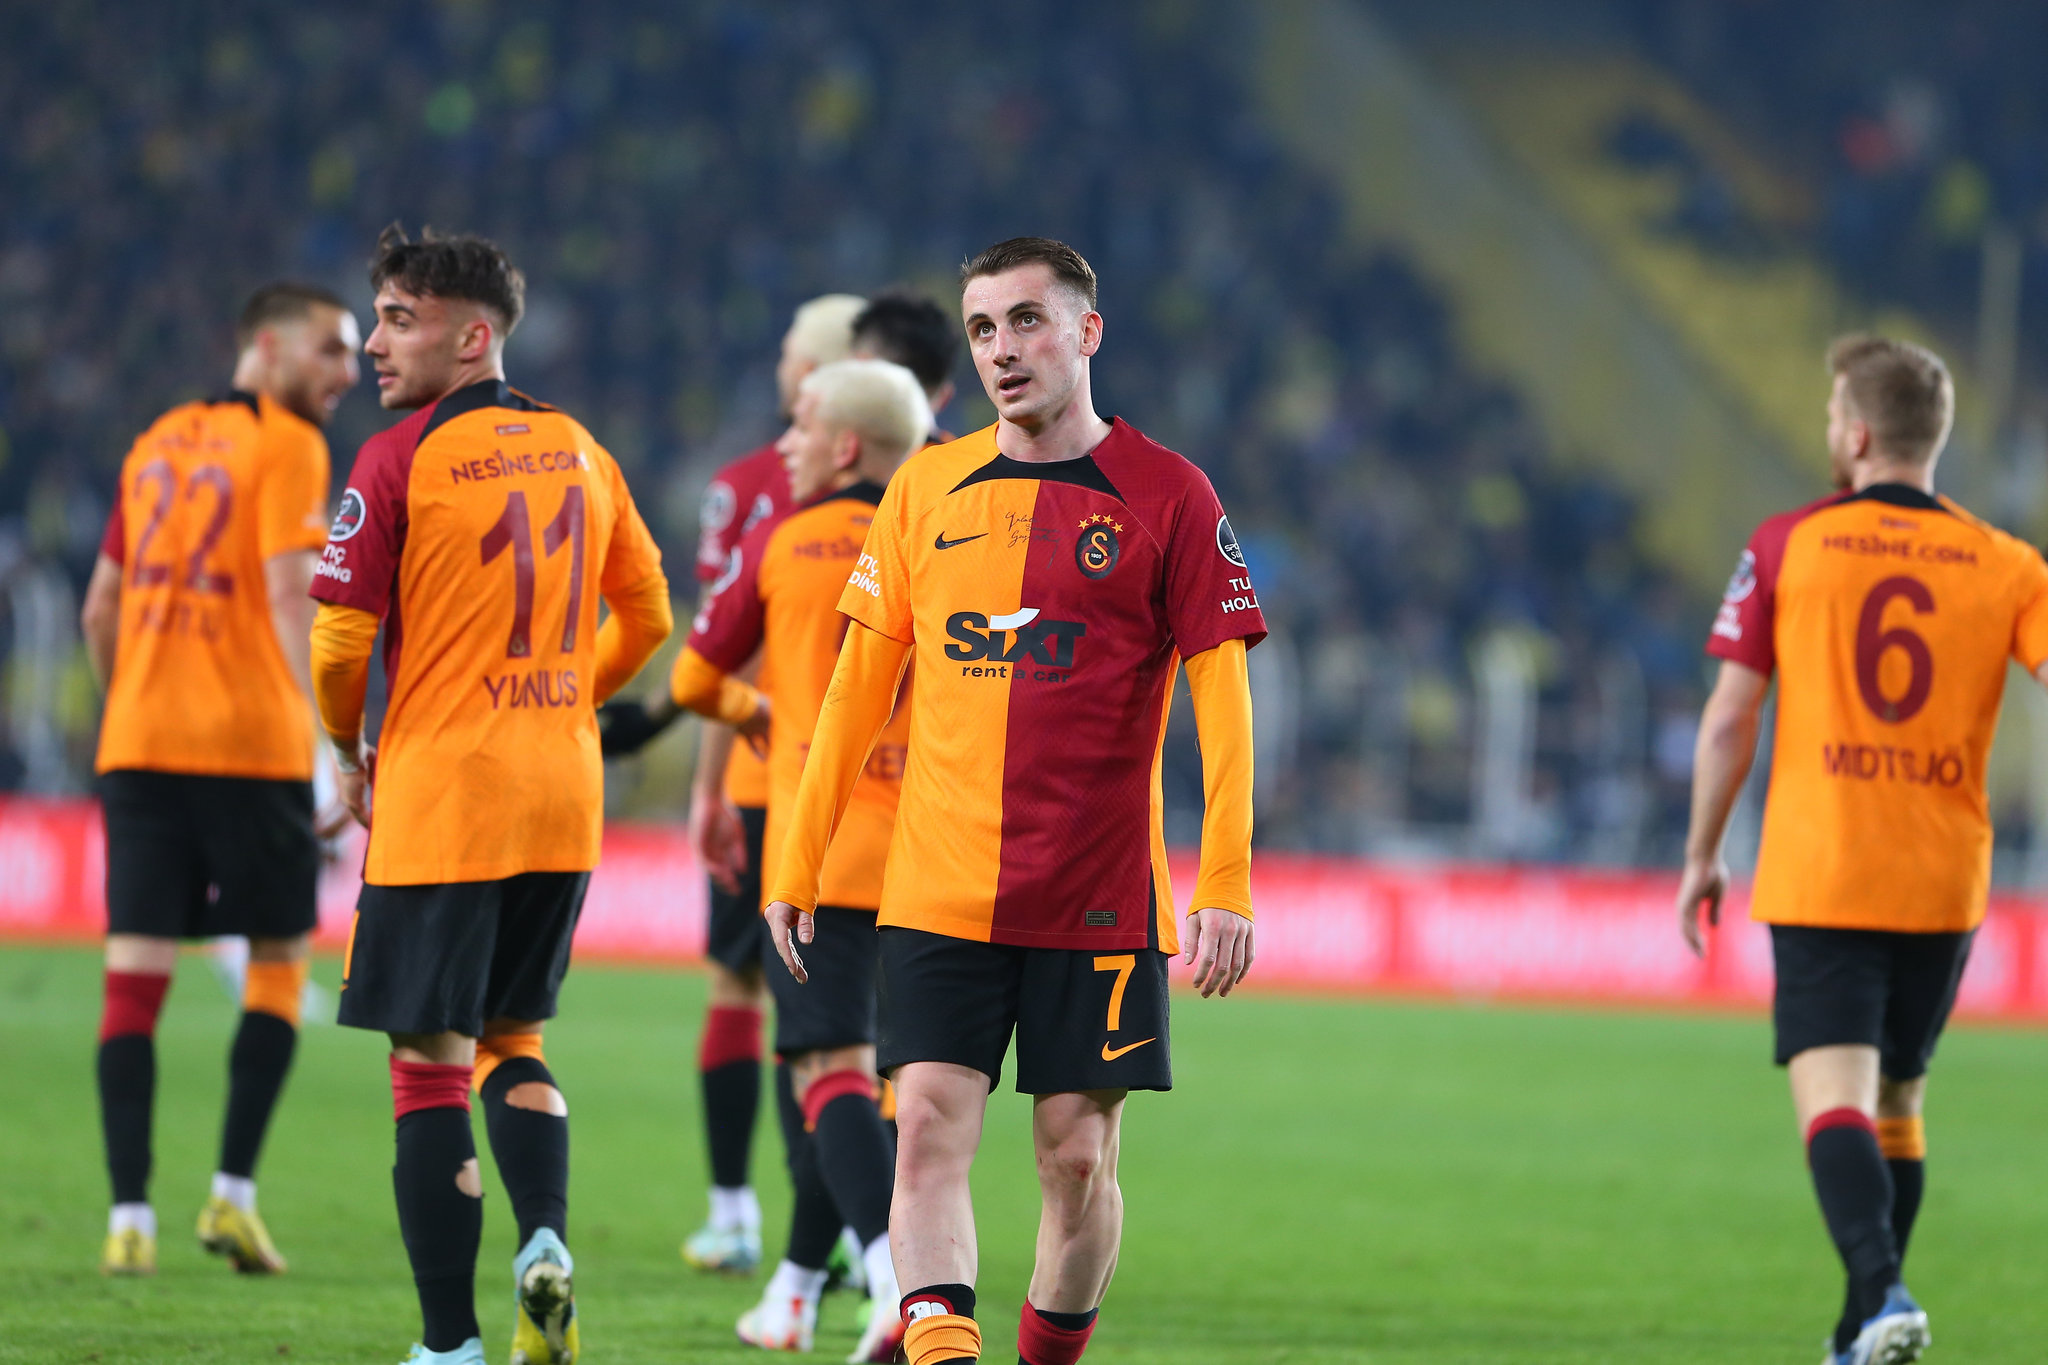 TRANSFER HABERİ: Liverpool’dan Galatasaray’a Tsimikas cevabı! İşte alınan karar